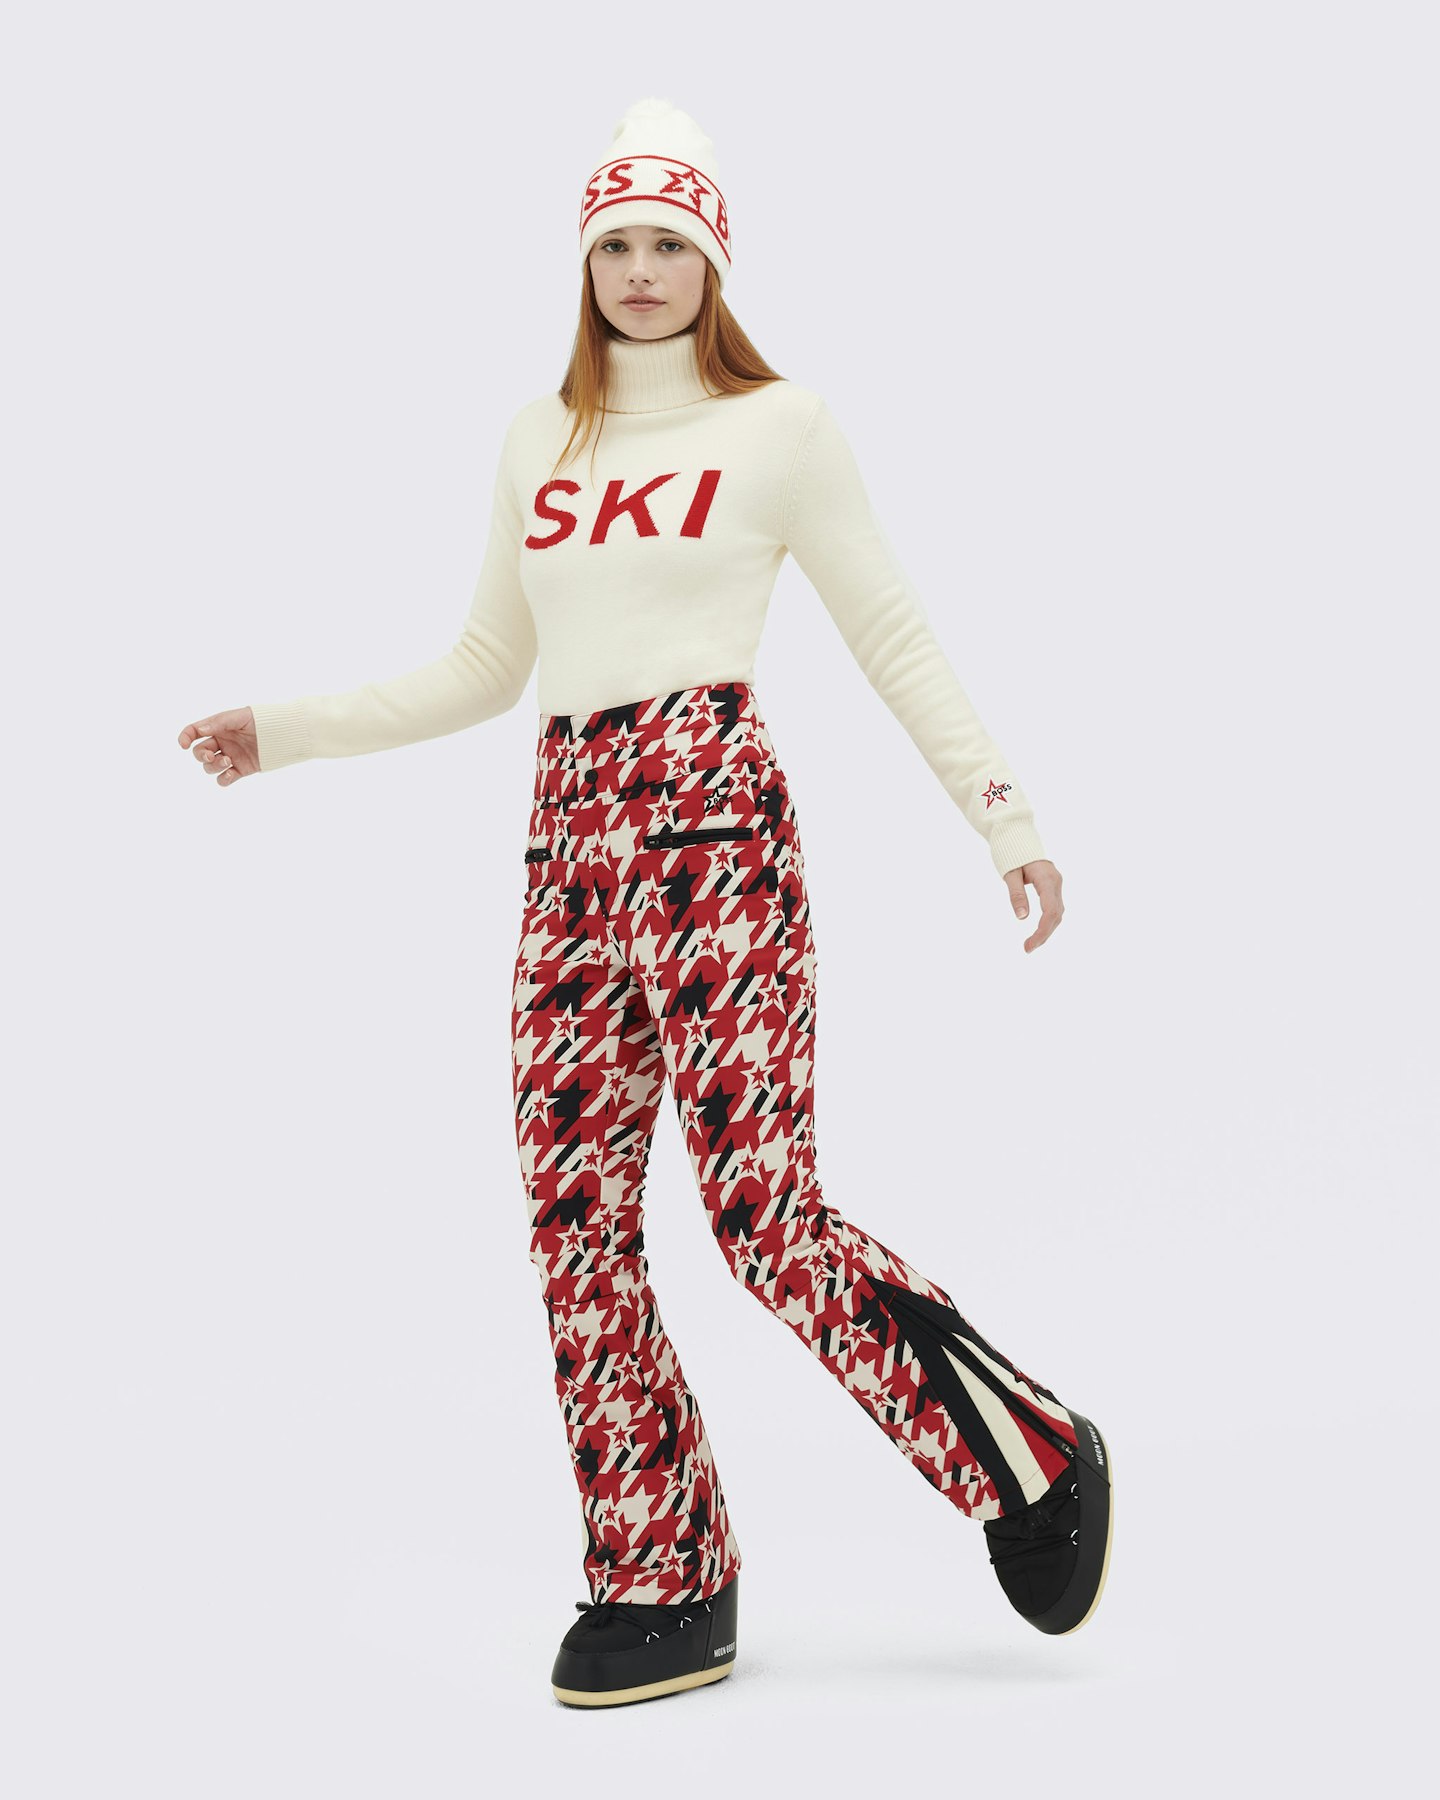 PM x BOSS Ski Merino Wool Turtleneck 4